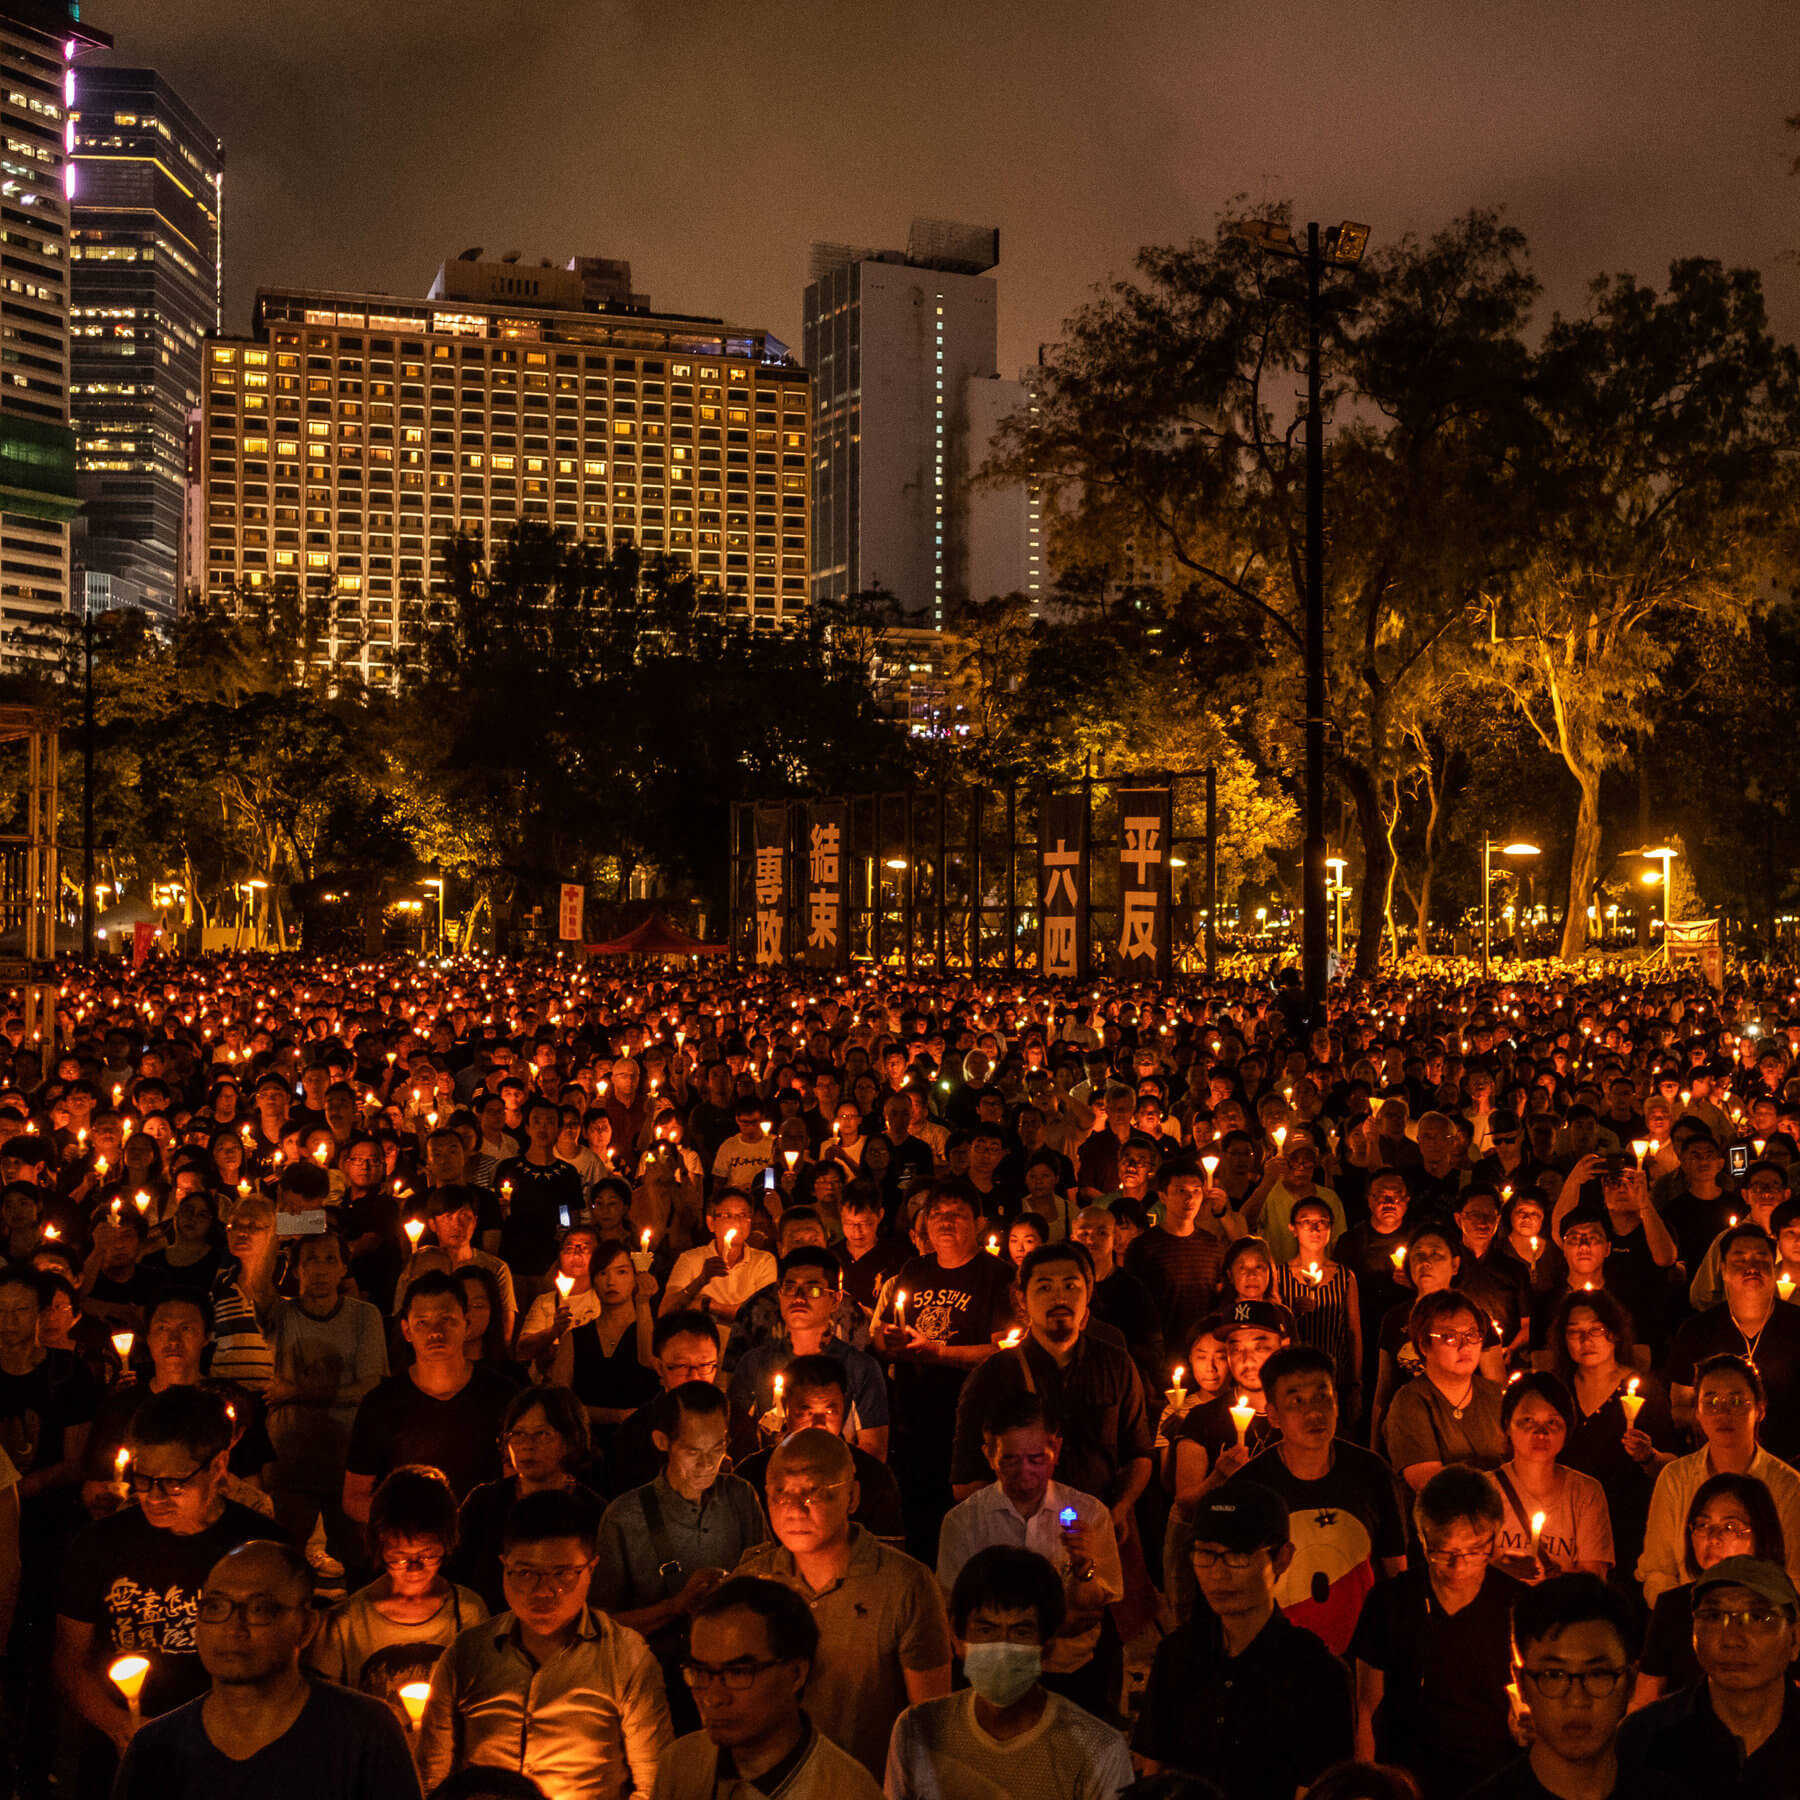 Hong Kong’s Annual Tiananmen Vigil Cancelled, 3,000 Riot Police Deployed to Enforce Ban